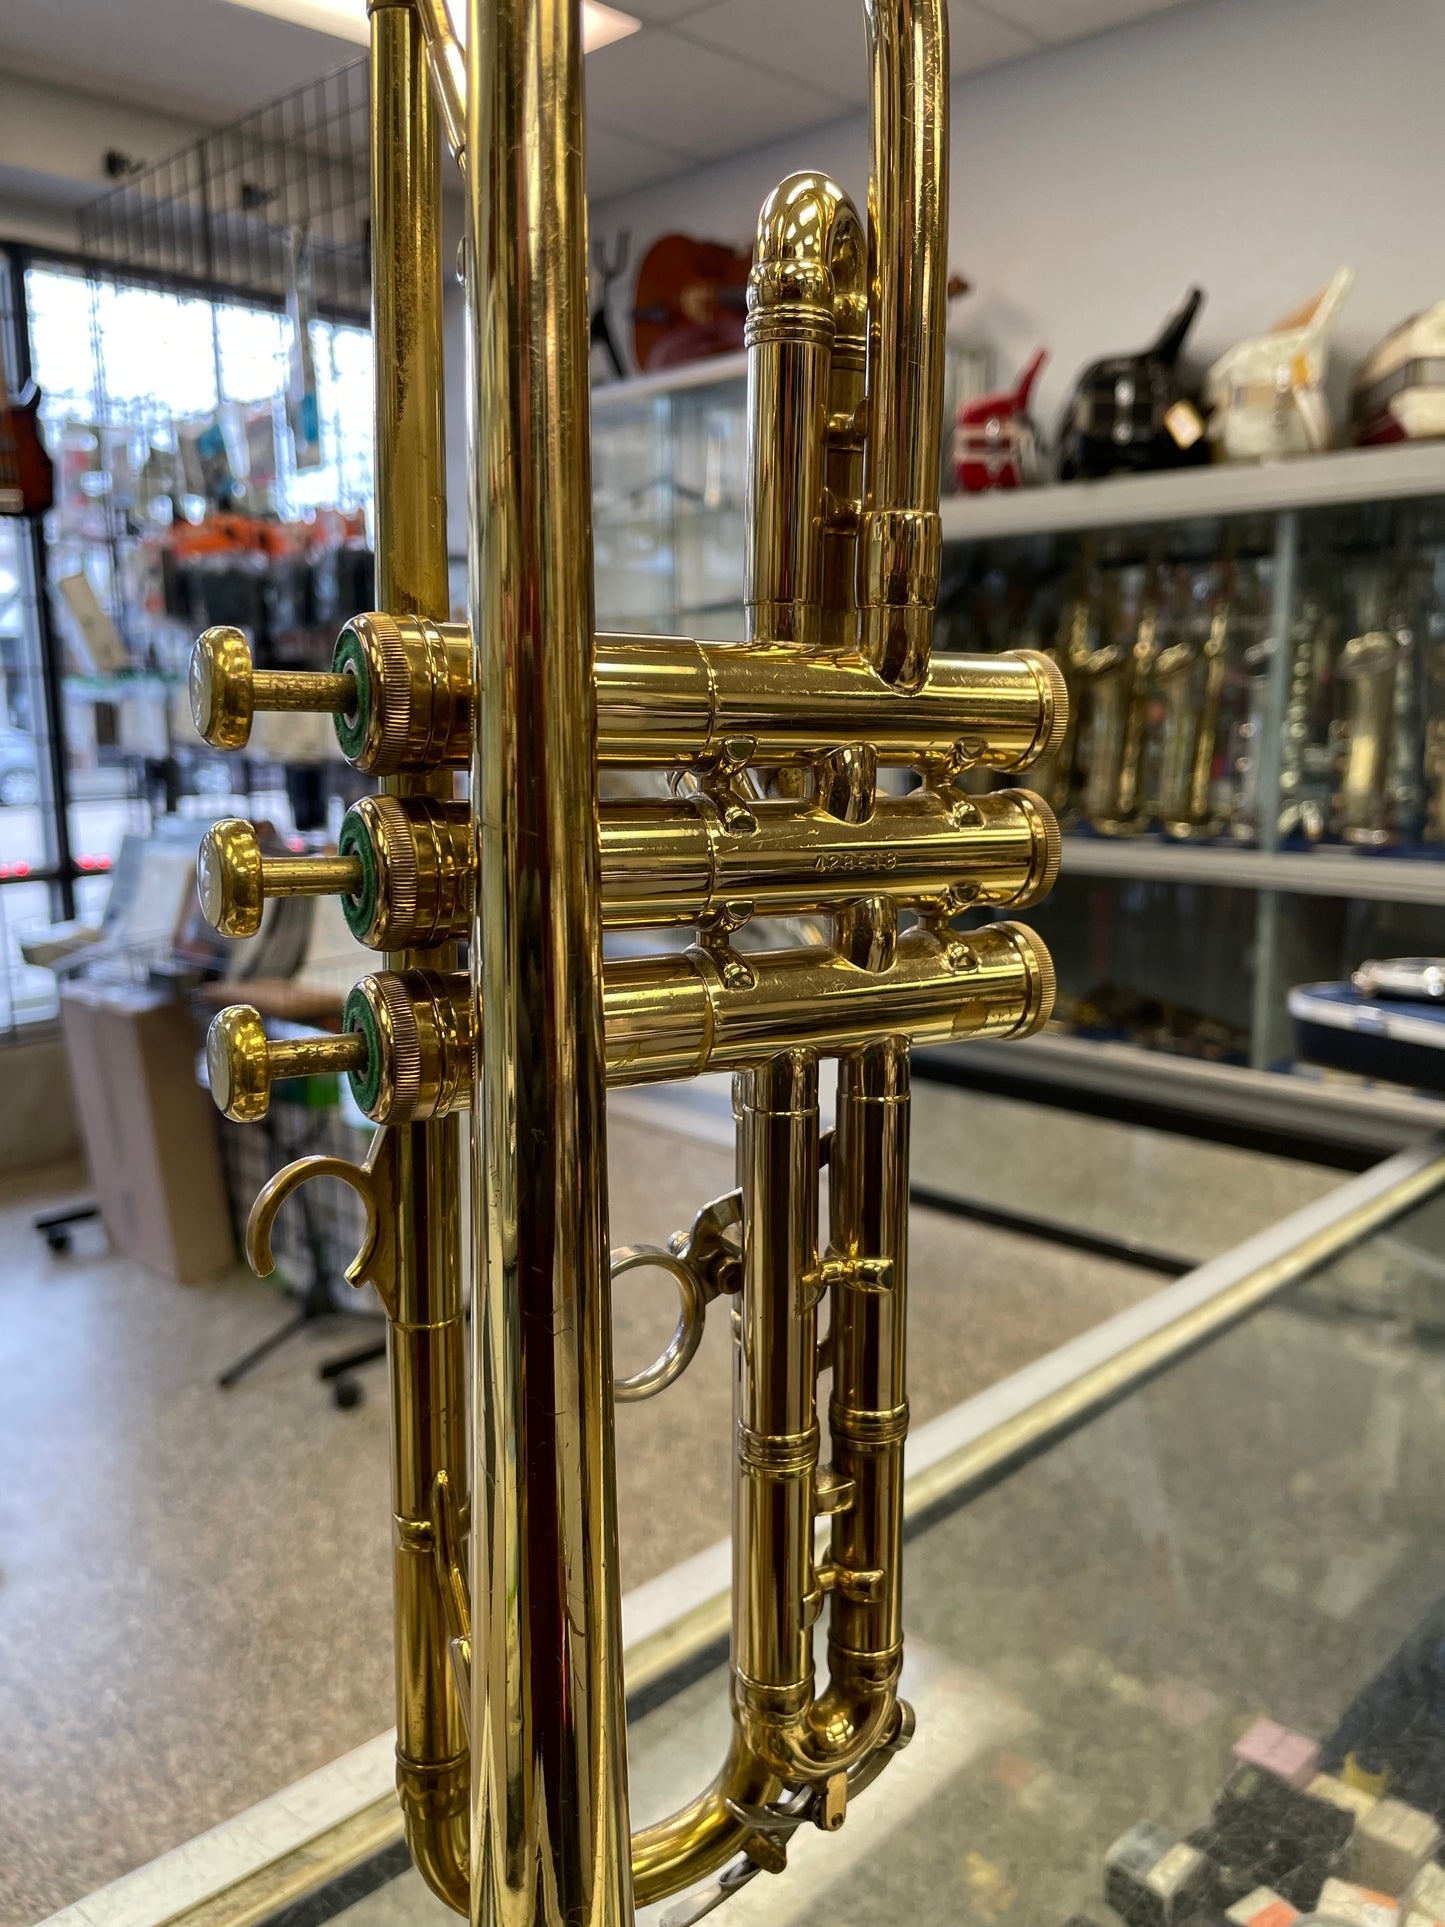 Pre-Owned Olds Mendez Trumpet - 1963